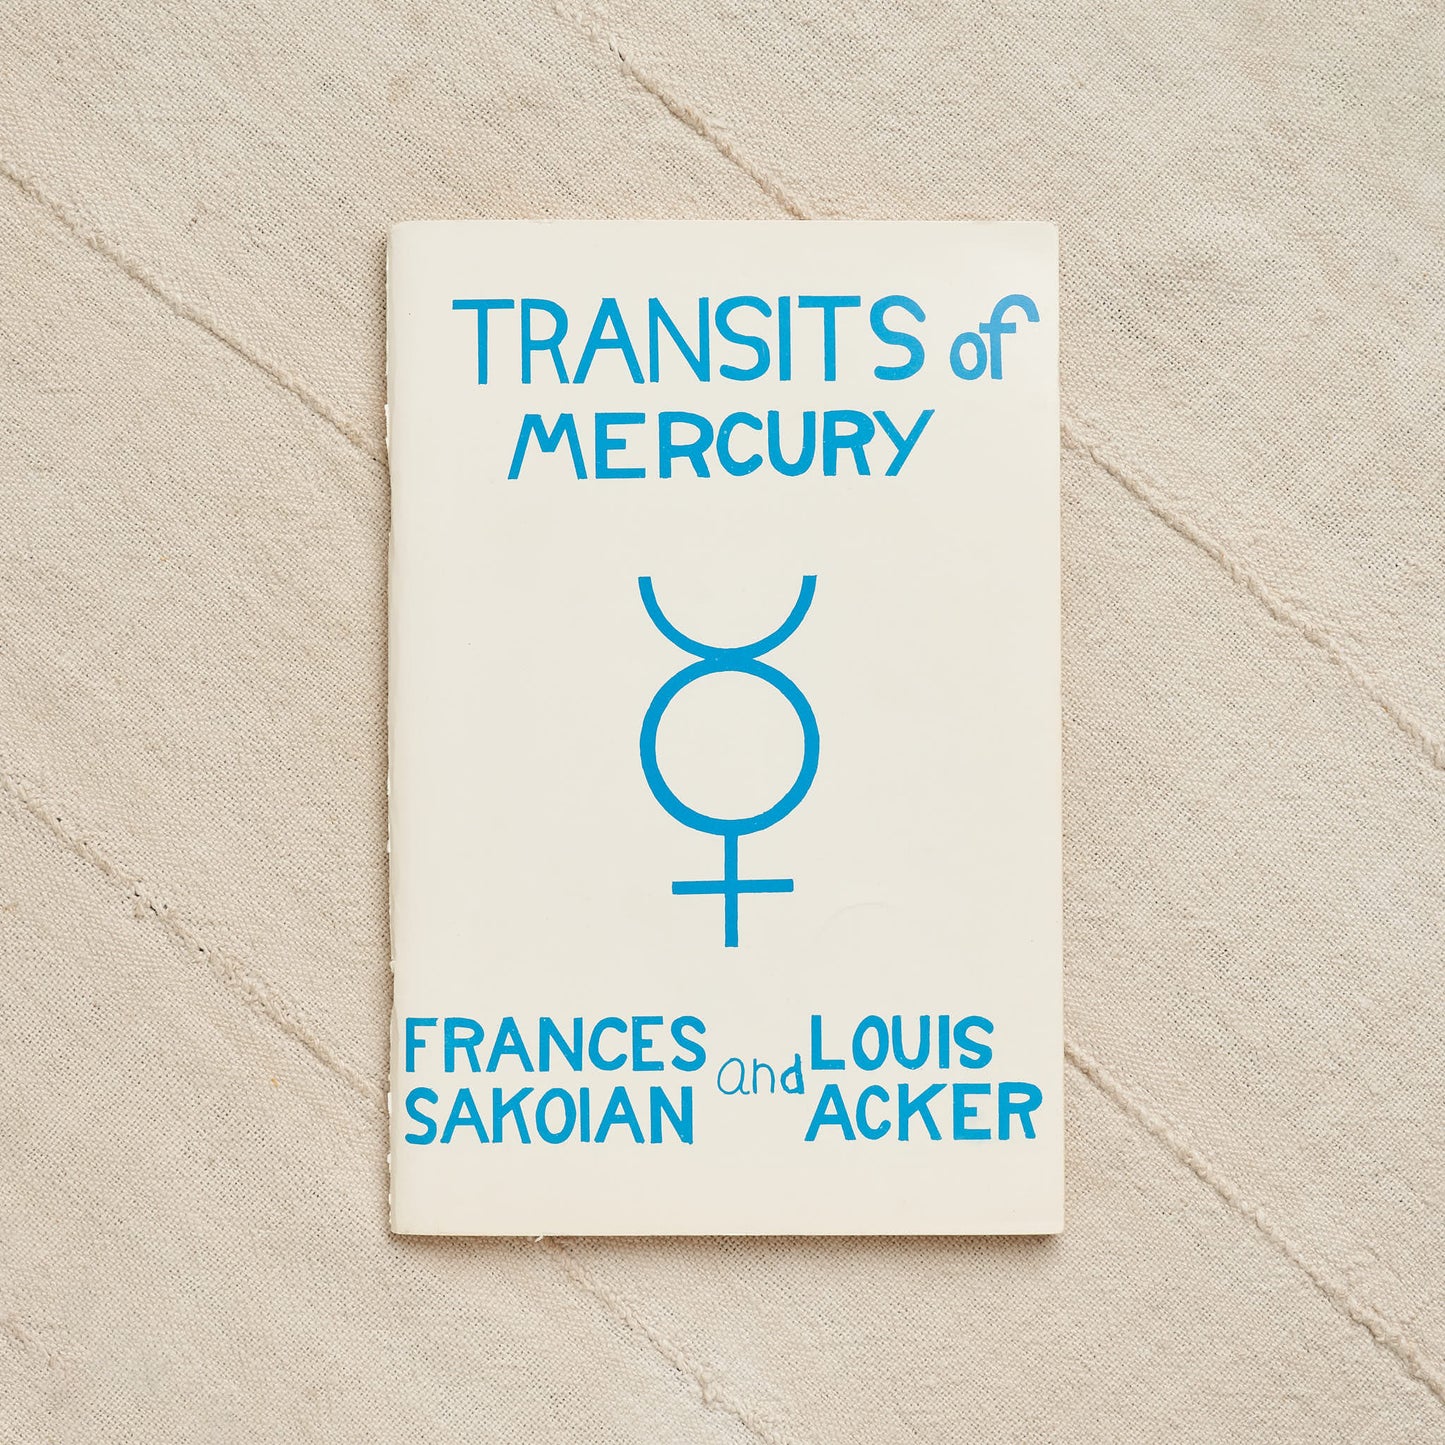 Transits of Mercury